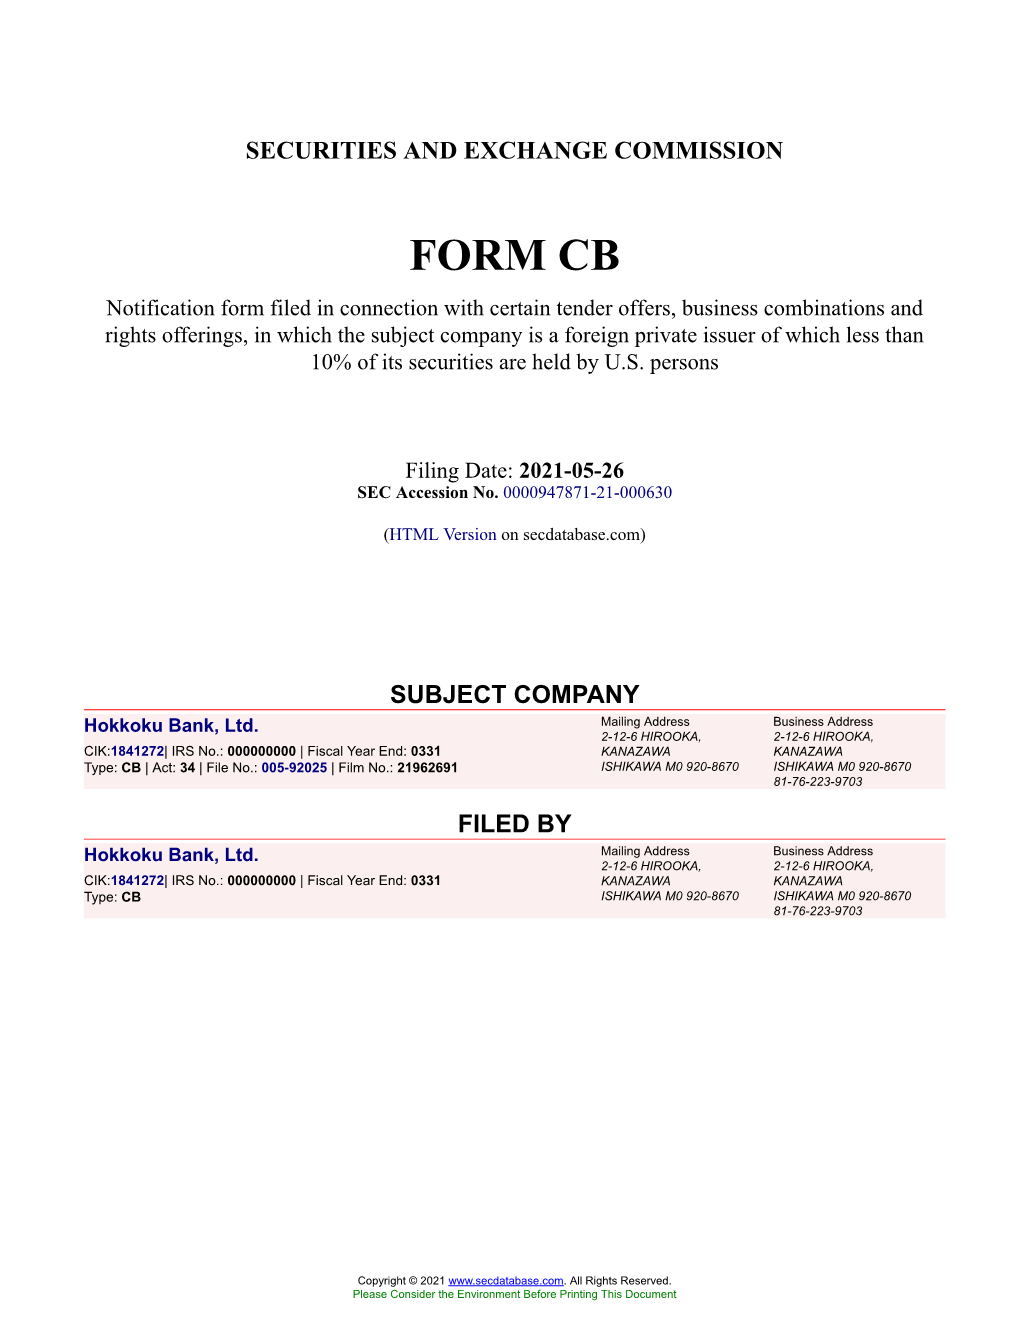 Hokkoku Bank, Ltd. Form CB Filed 2021-05-26